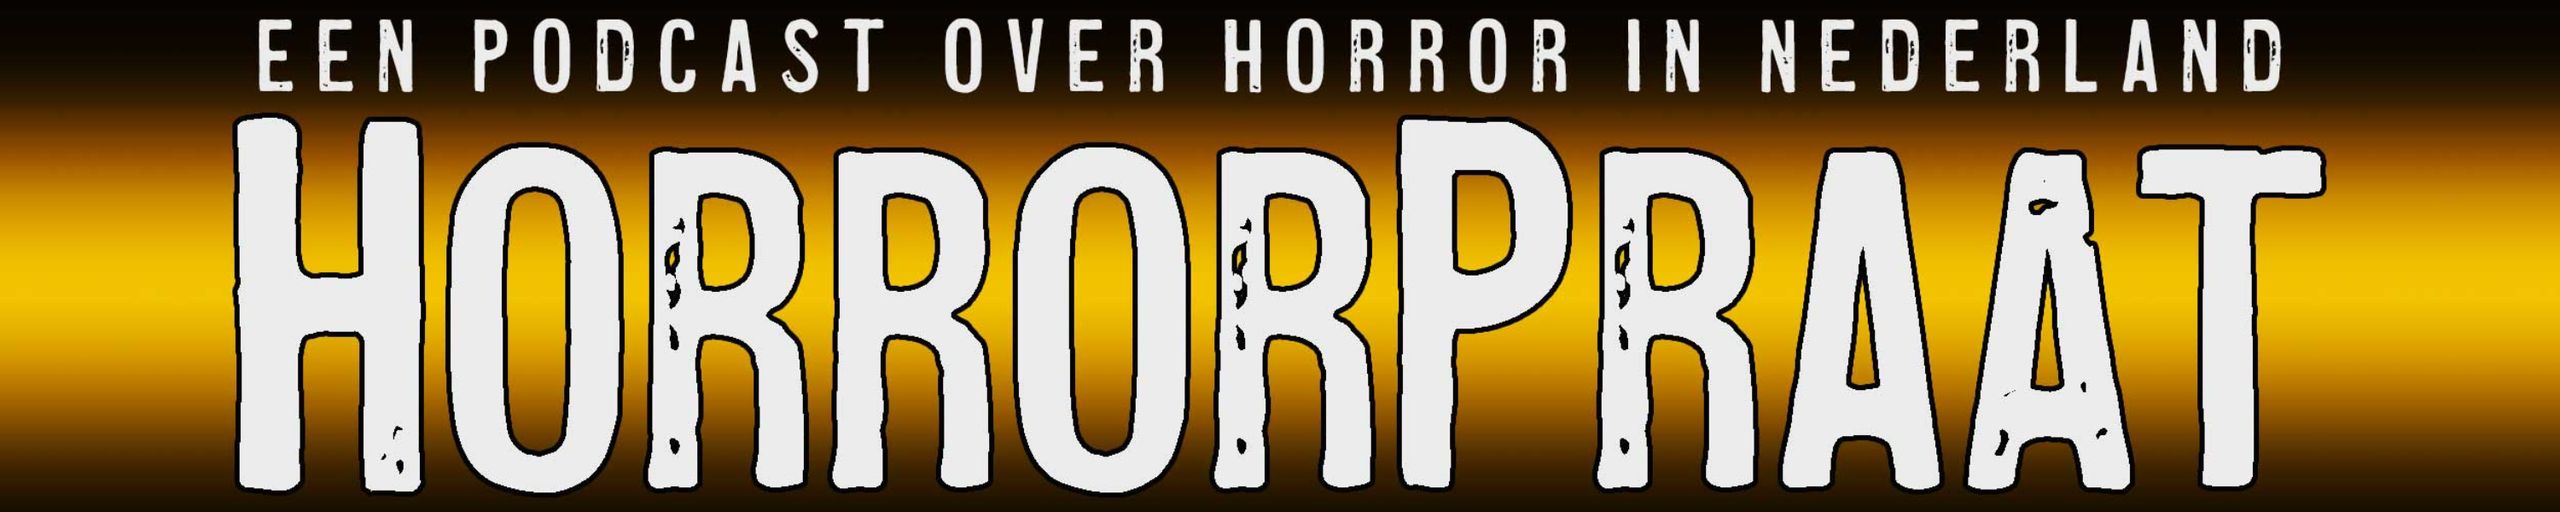 HorrorPraat - Een podcast over horror in Nederland